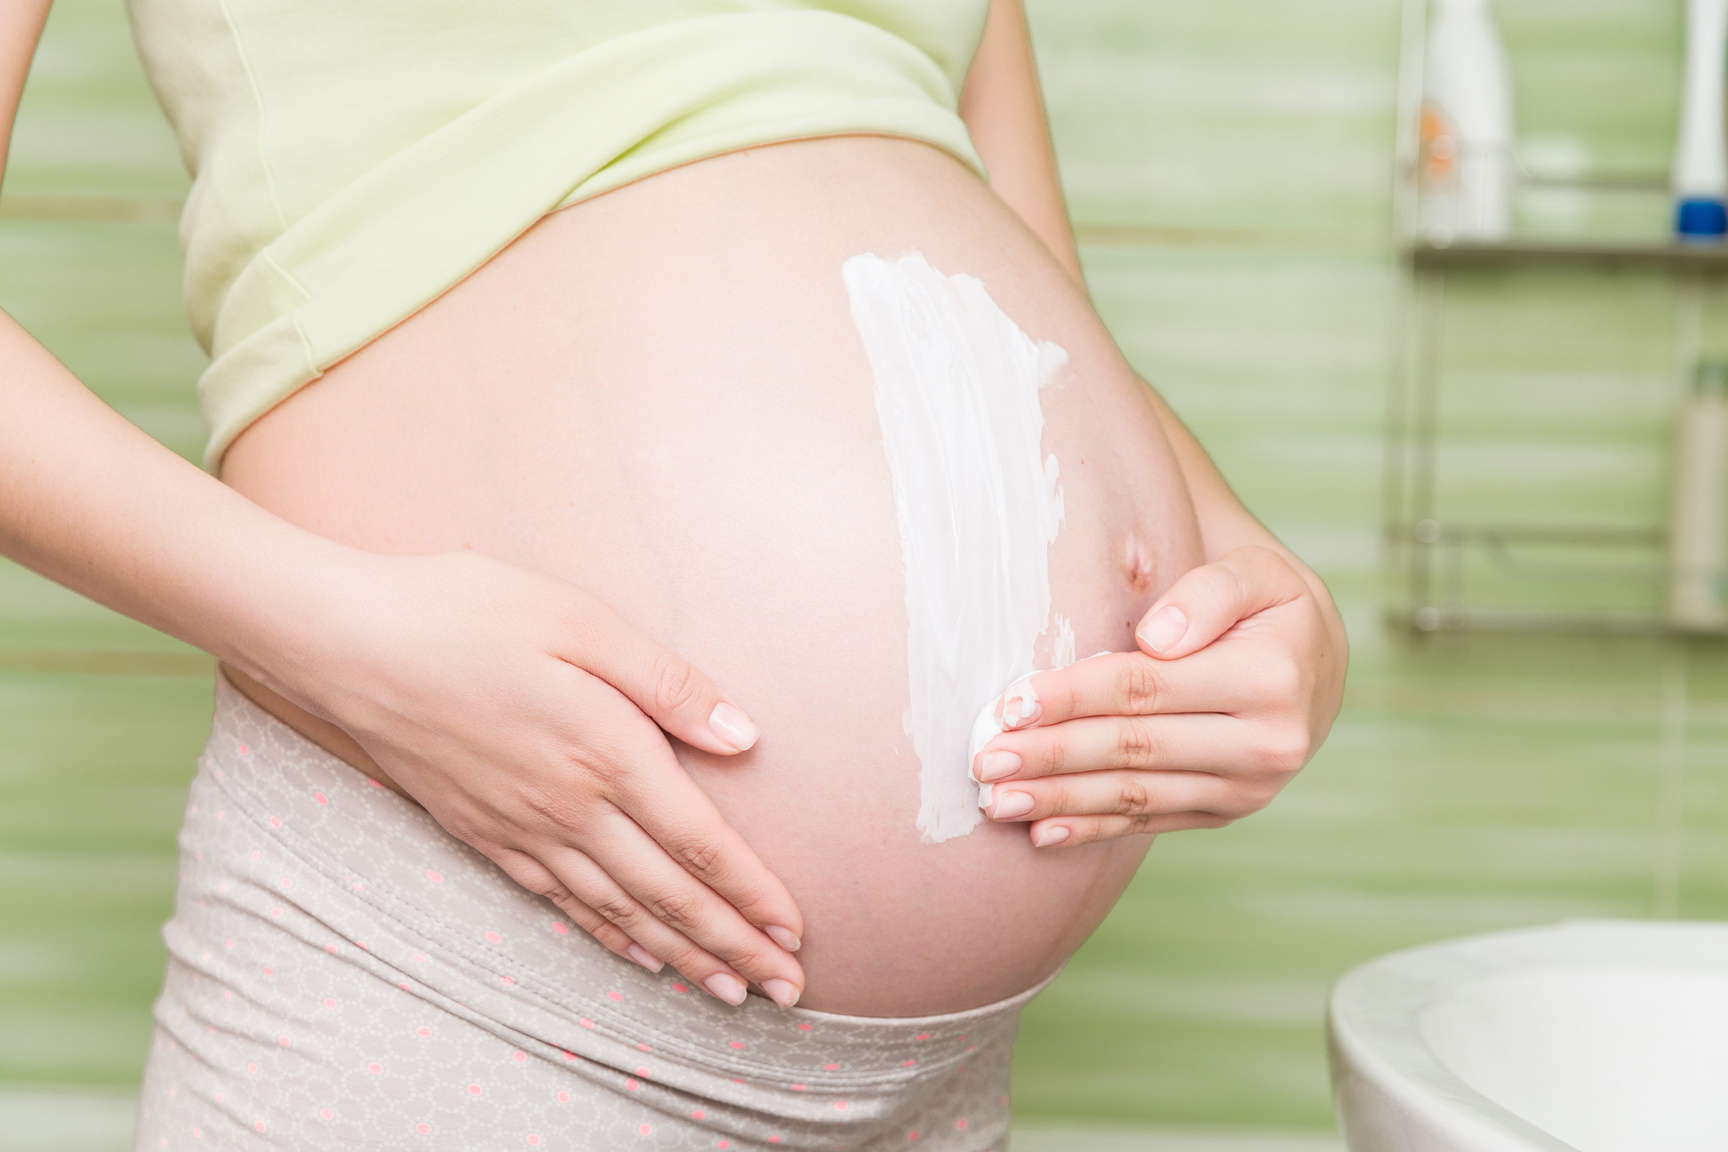 Pregnant Woman Applying Anti-Stretch Marks Cream